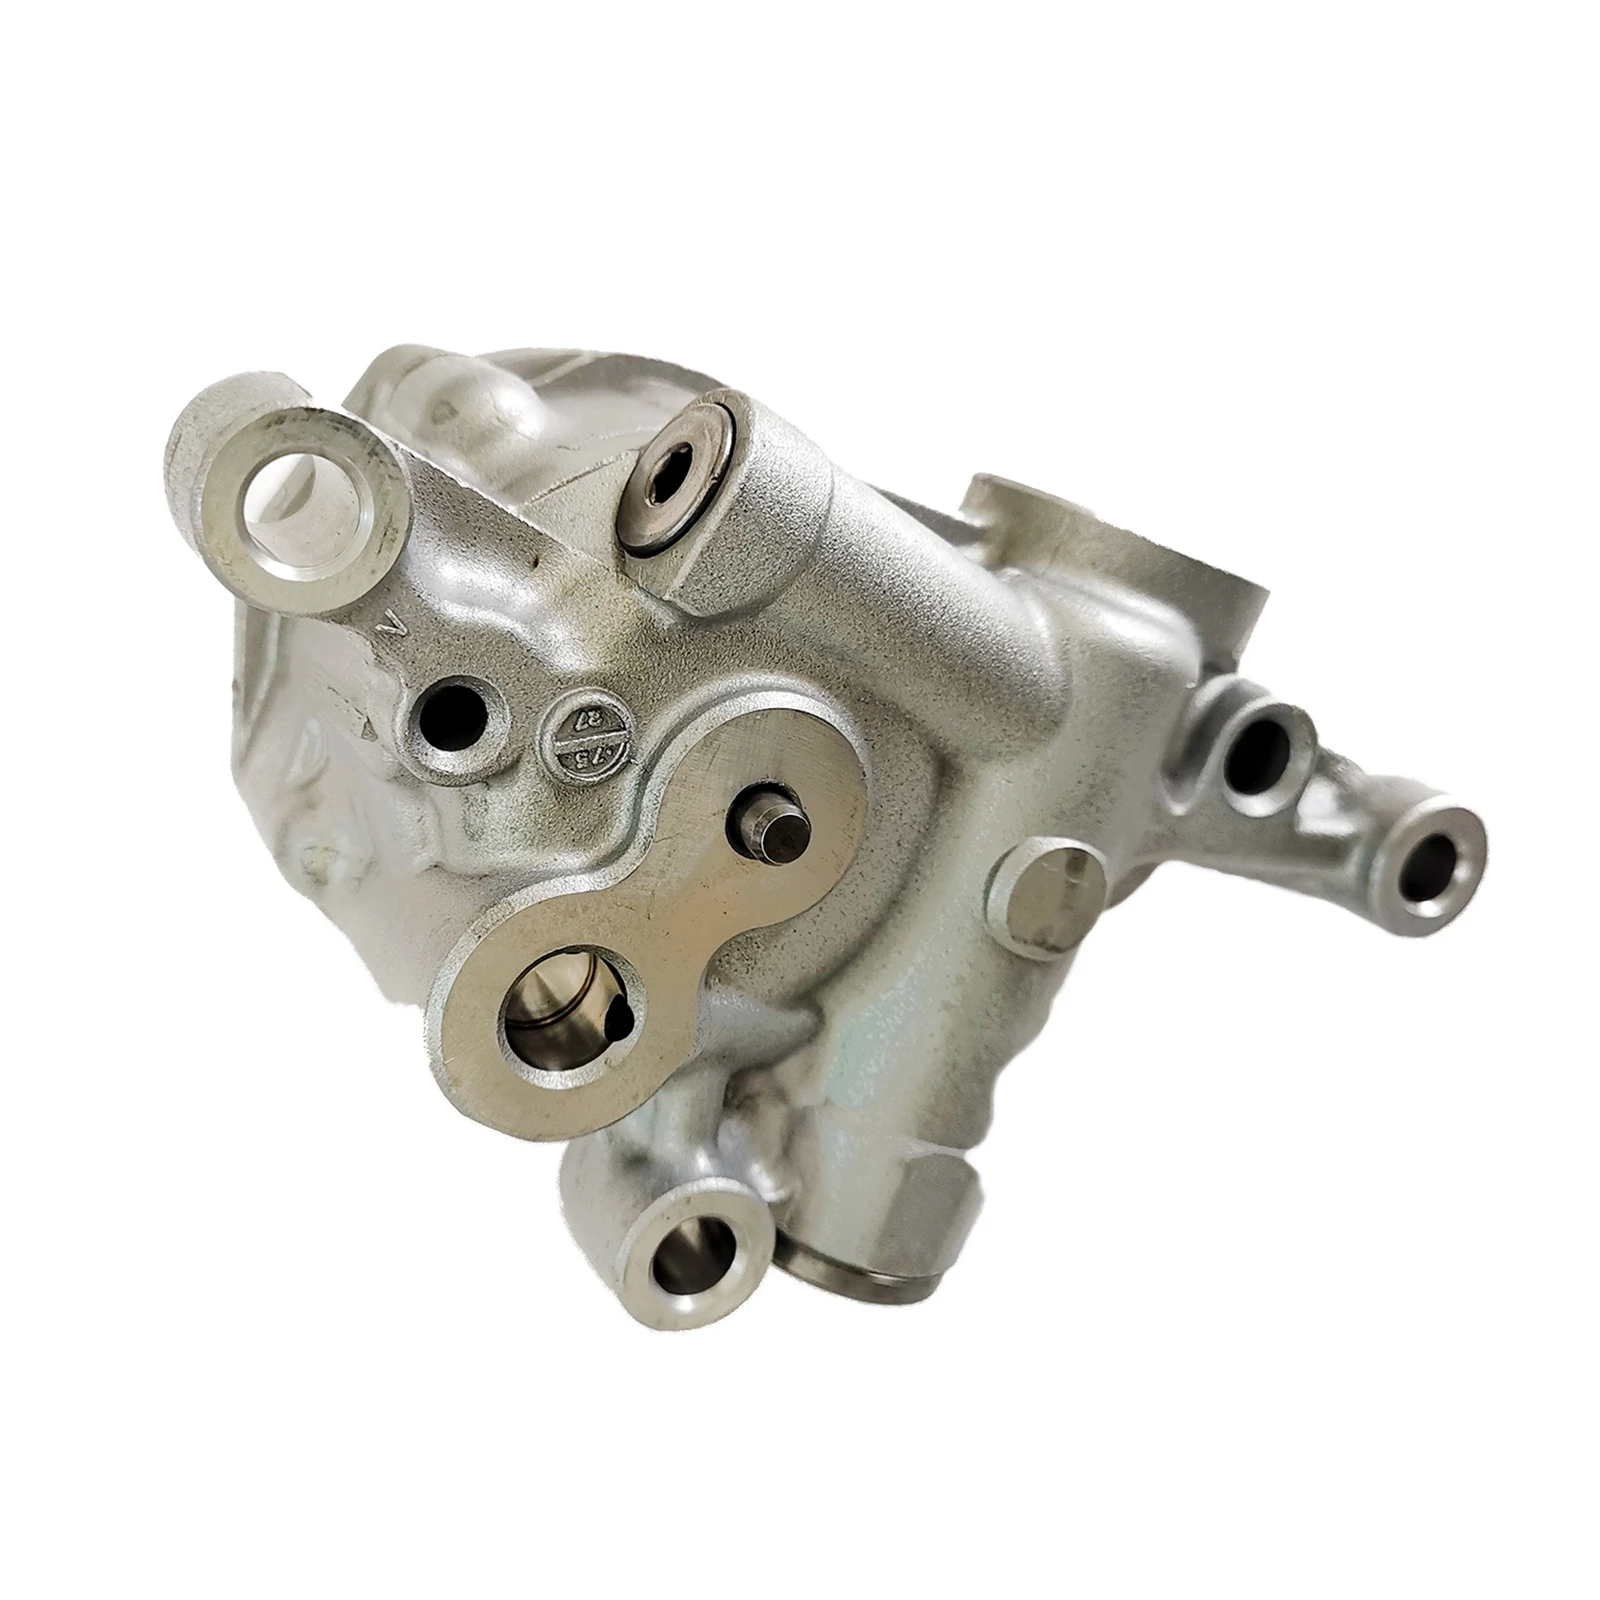 Transmission Oil Pump for  13-15 L4 1.0L Drive Train Replacement Automotive Parts Jf015E RE0F11A for 